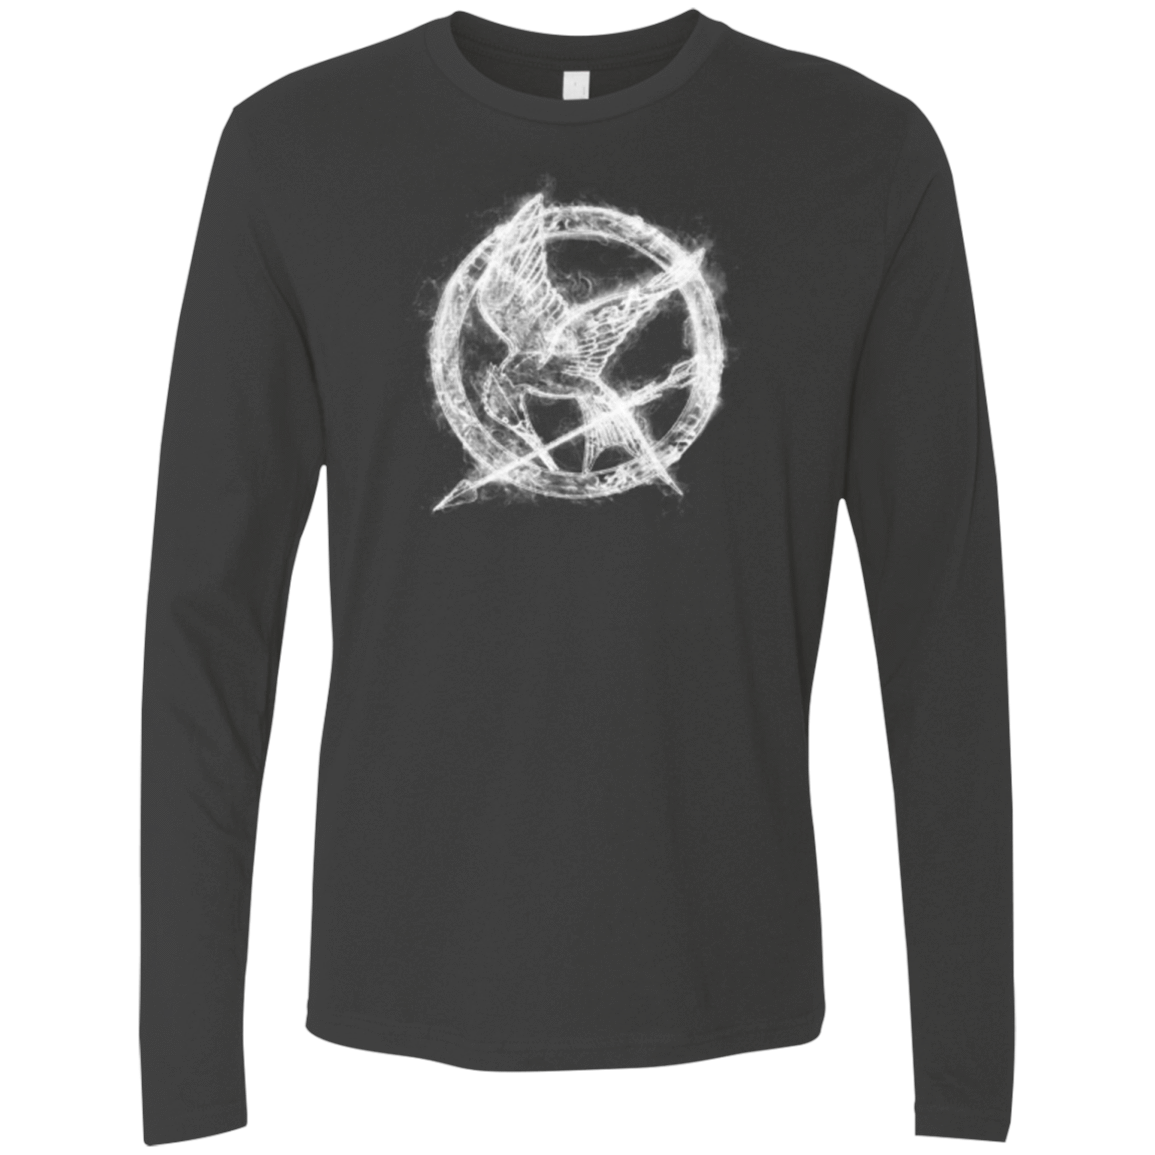 T-Shirts Heavy Metal / Small Hunger Games Smoke Men's Premium Long Sleeve